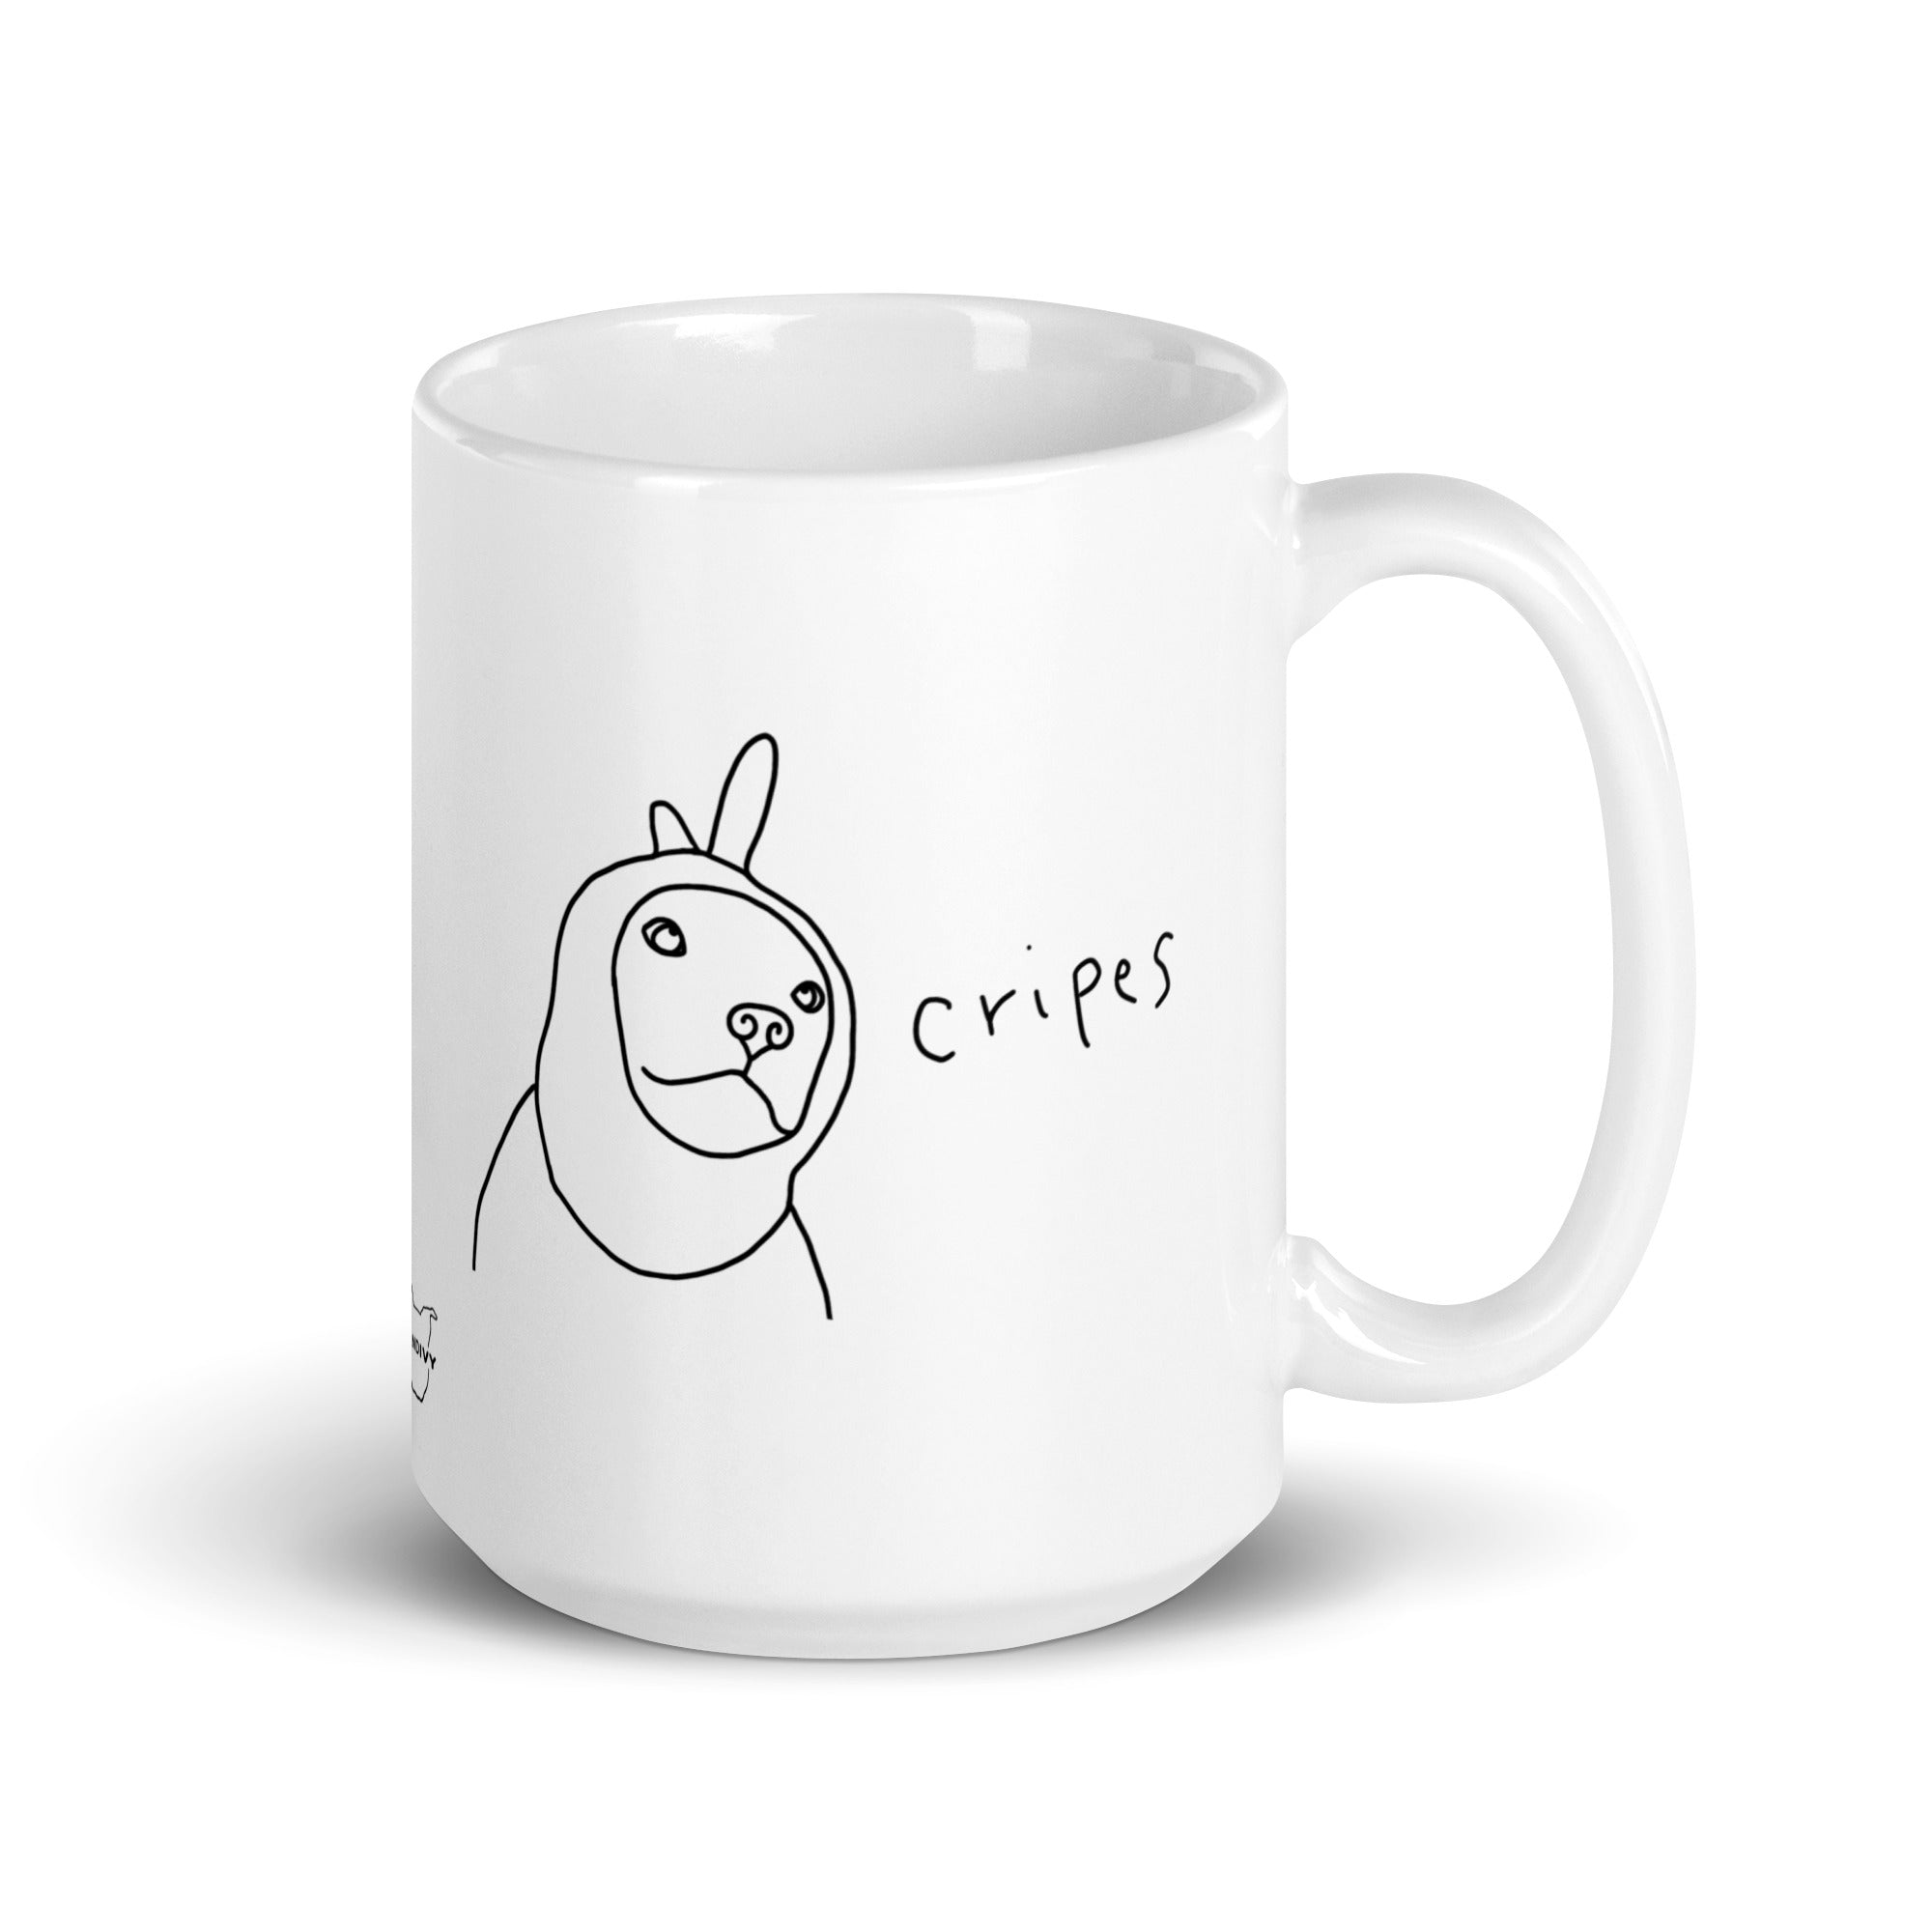 "Cripes" White glossy mug